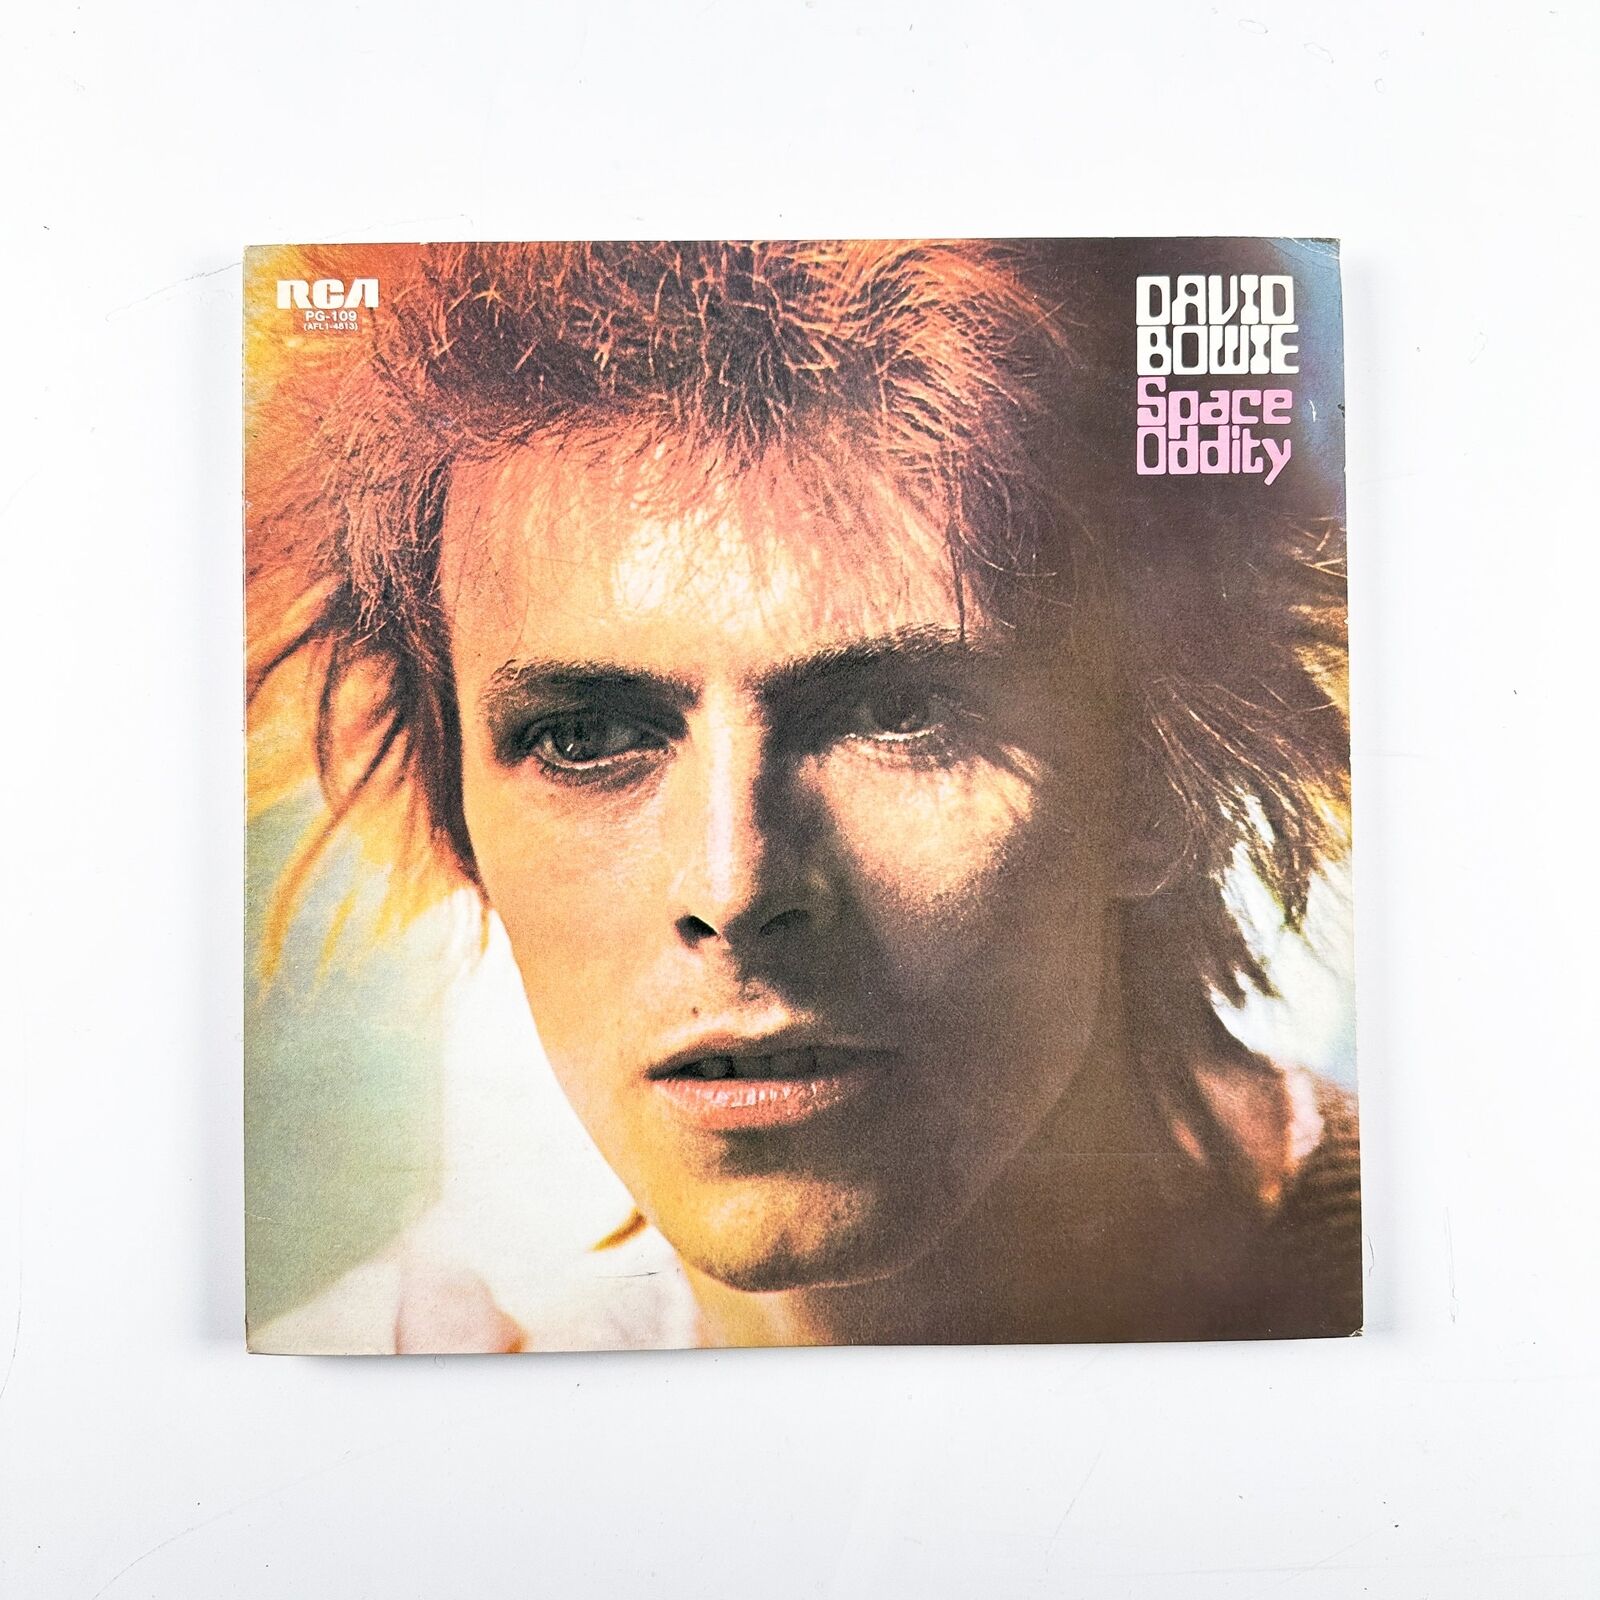 David Bowie - Space Oddity - Vinyl LP Record - 1978